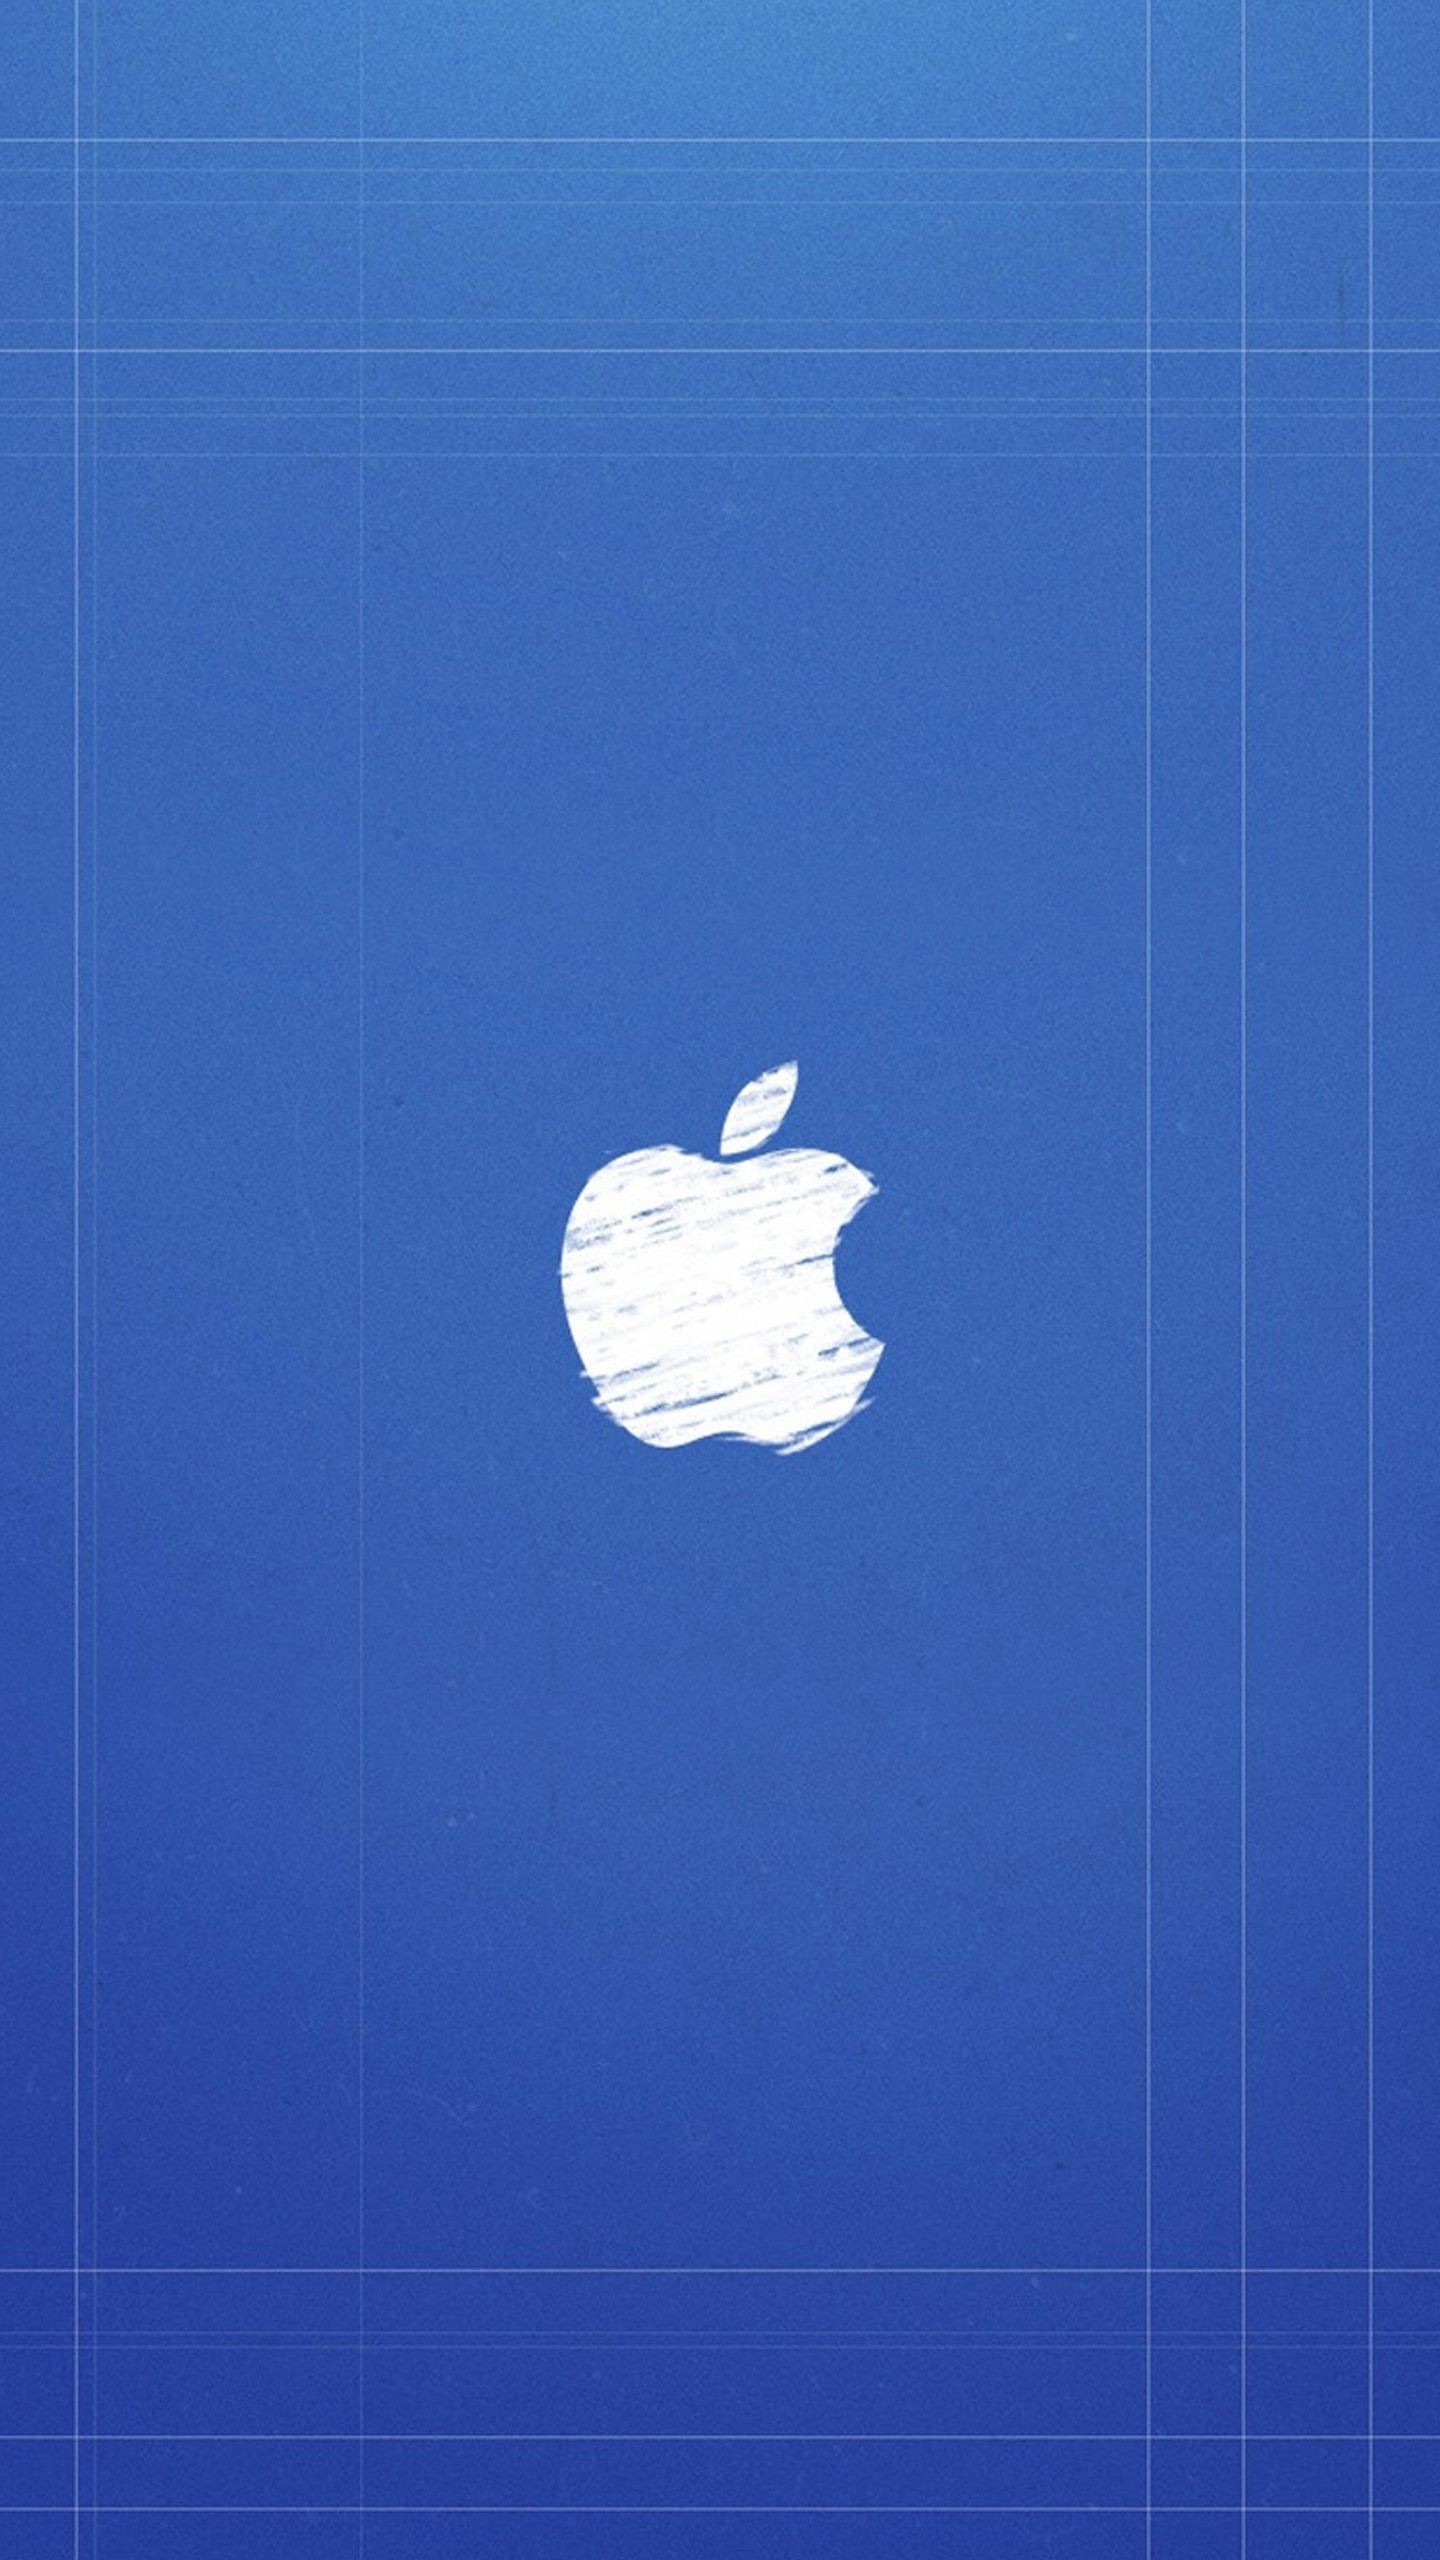 apple wallpaper,blue,sky,illustration,apple,cloud